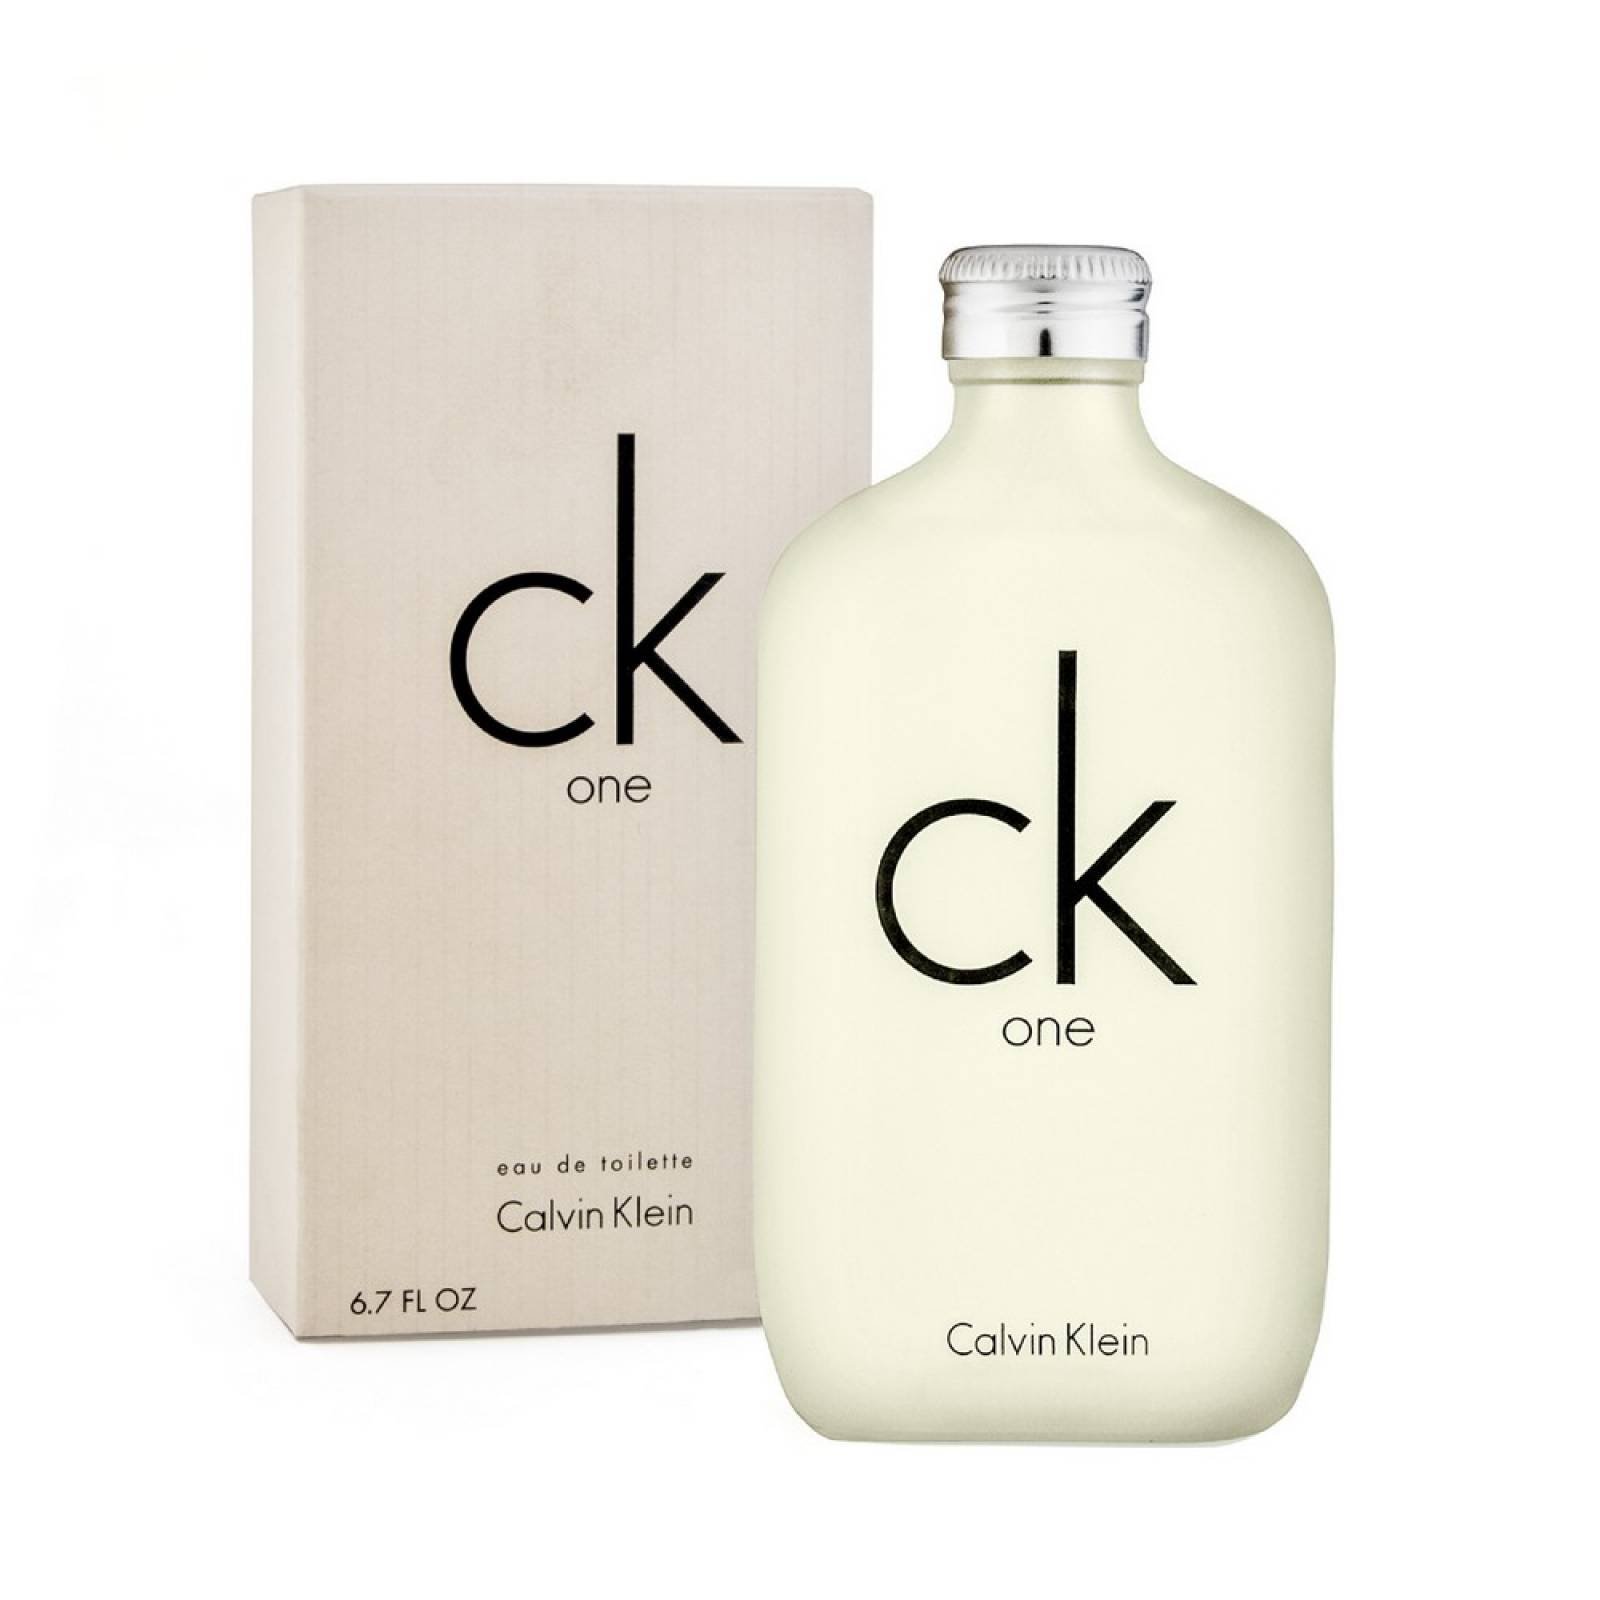 CK ONE de Calvin Klein Eau de Toilette 100 ml. Fragancia para Unisex